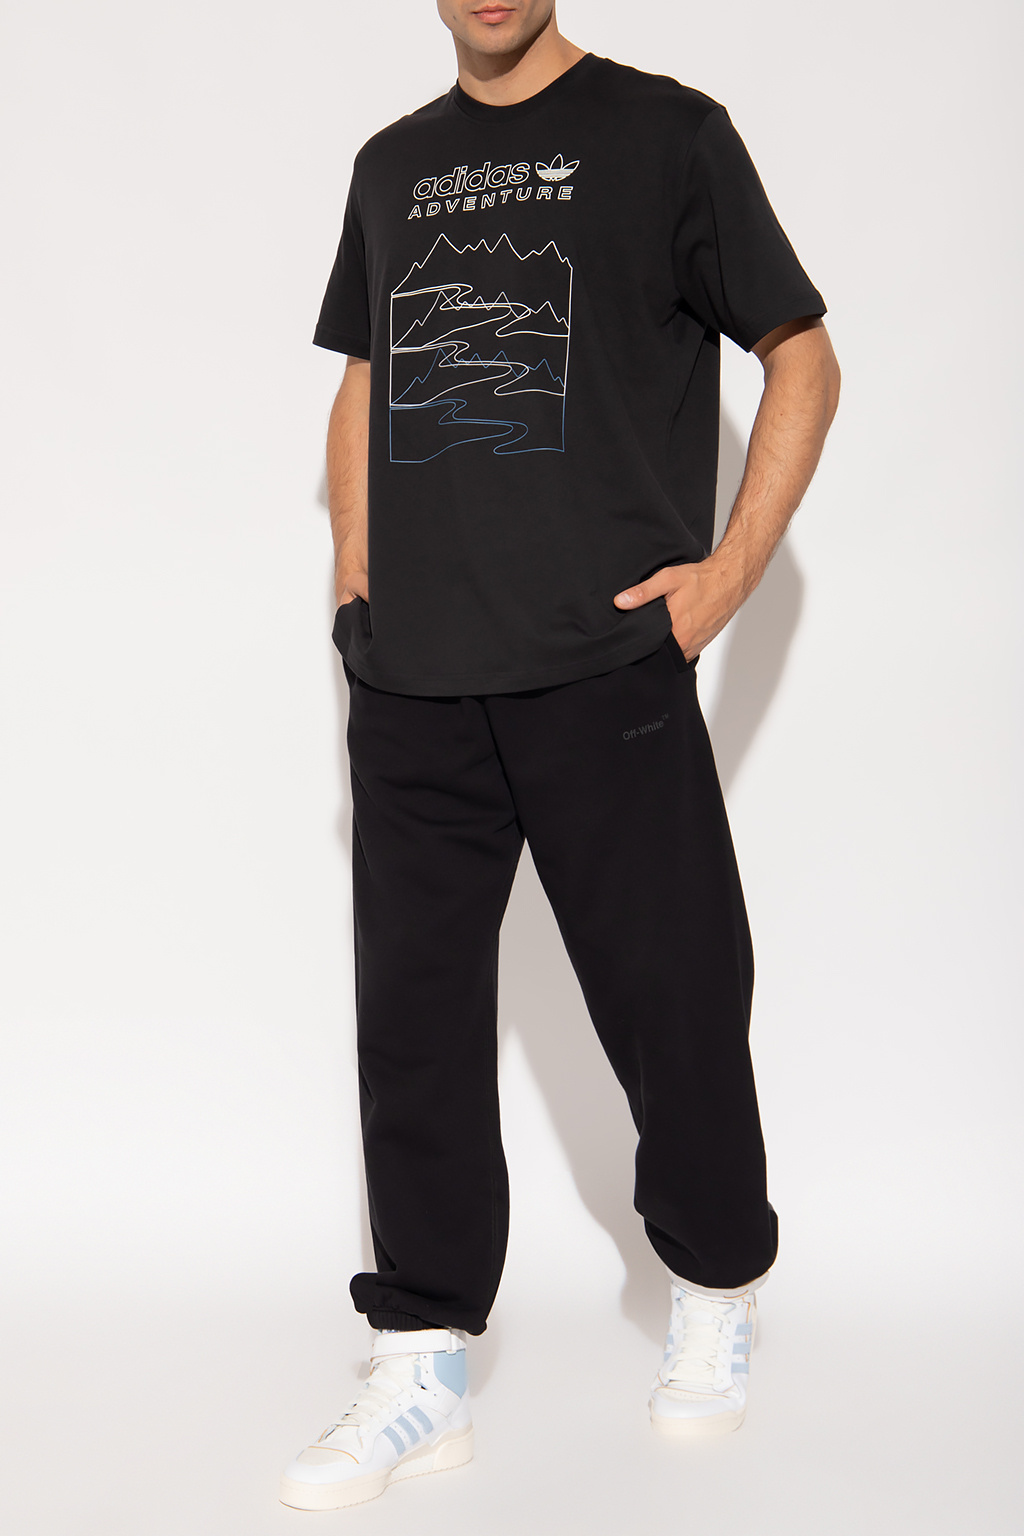 shirt | Men's - ADIDAS Originals Printed T | ro james adidas salary list IetpShops